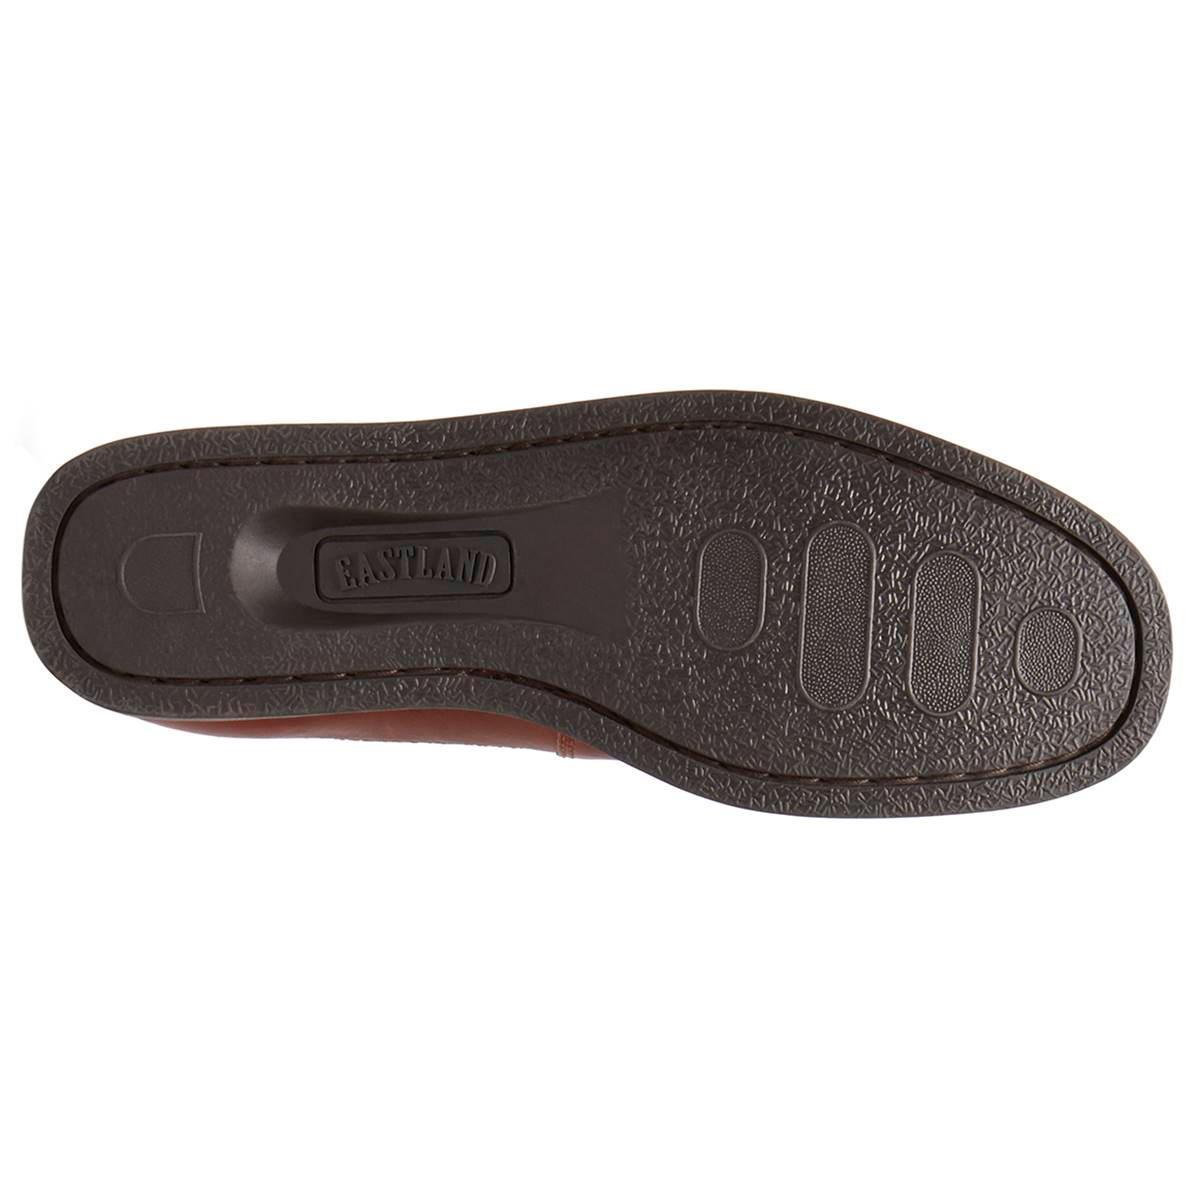 Eastland Seneca Moc Toe Boot Product Image